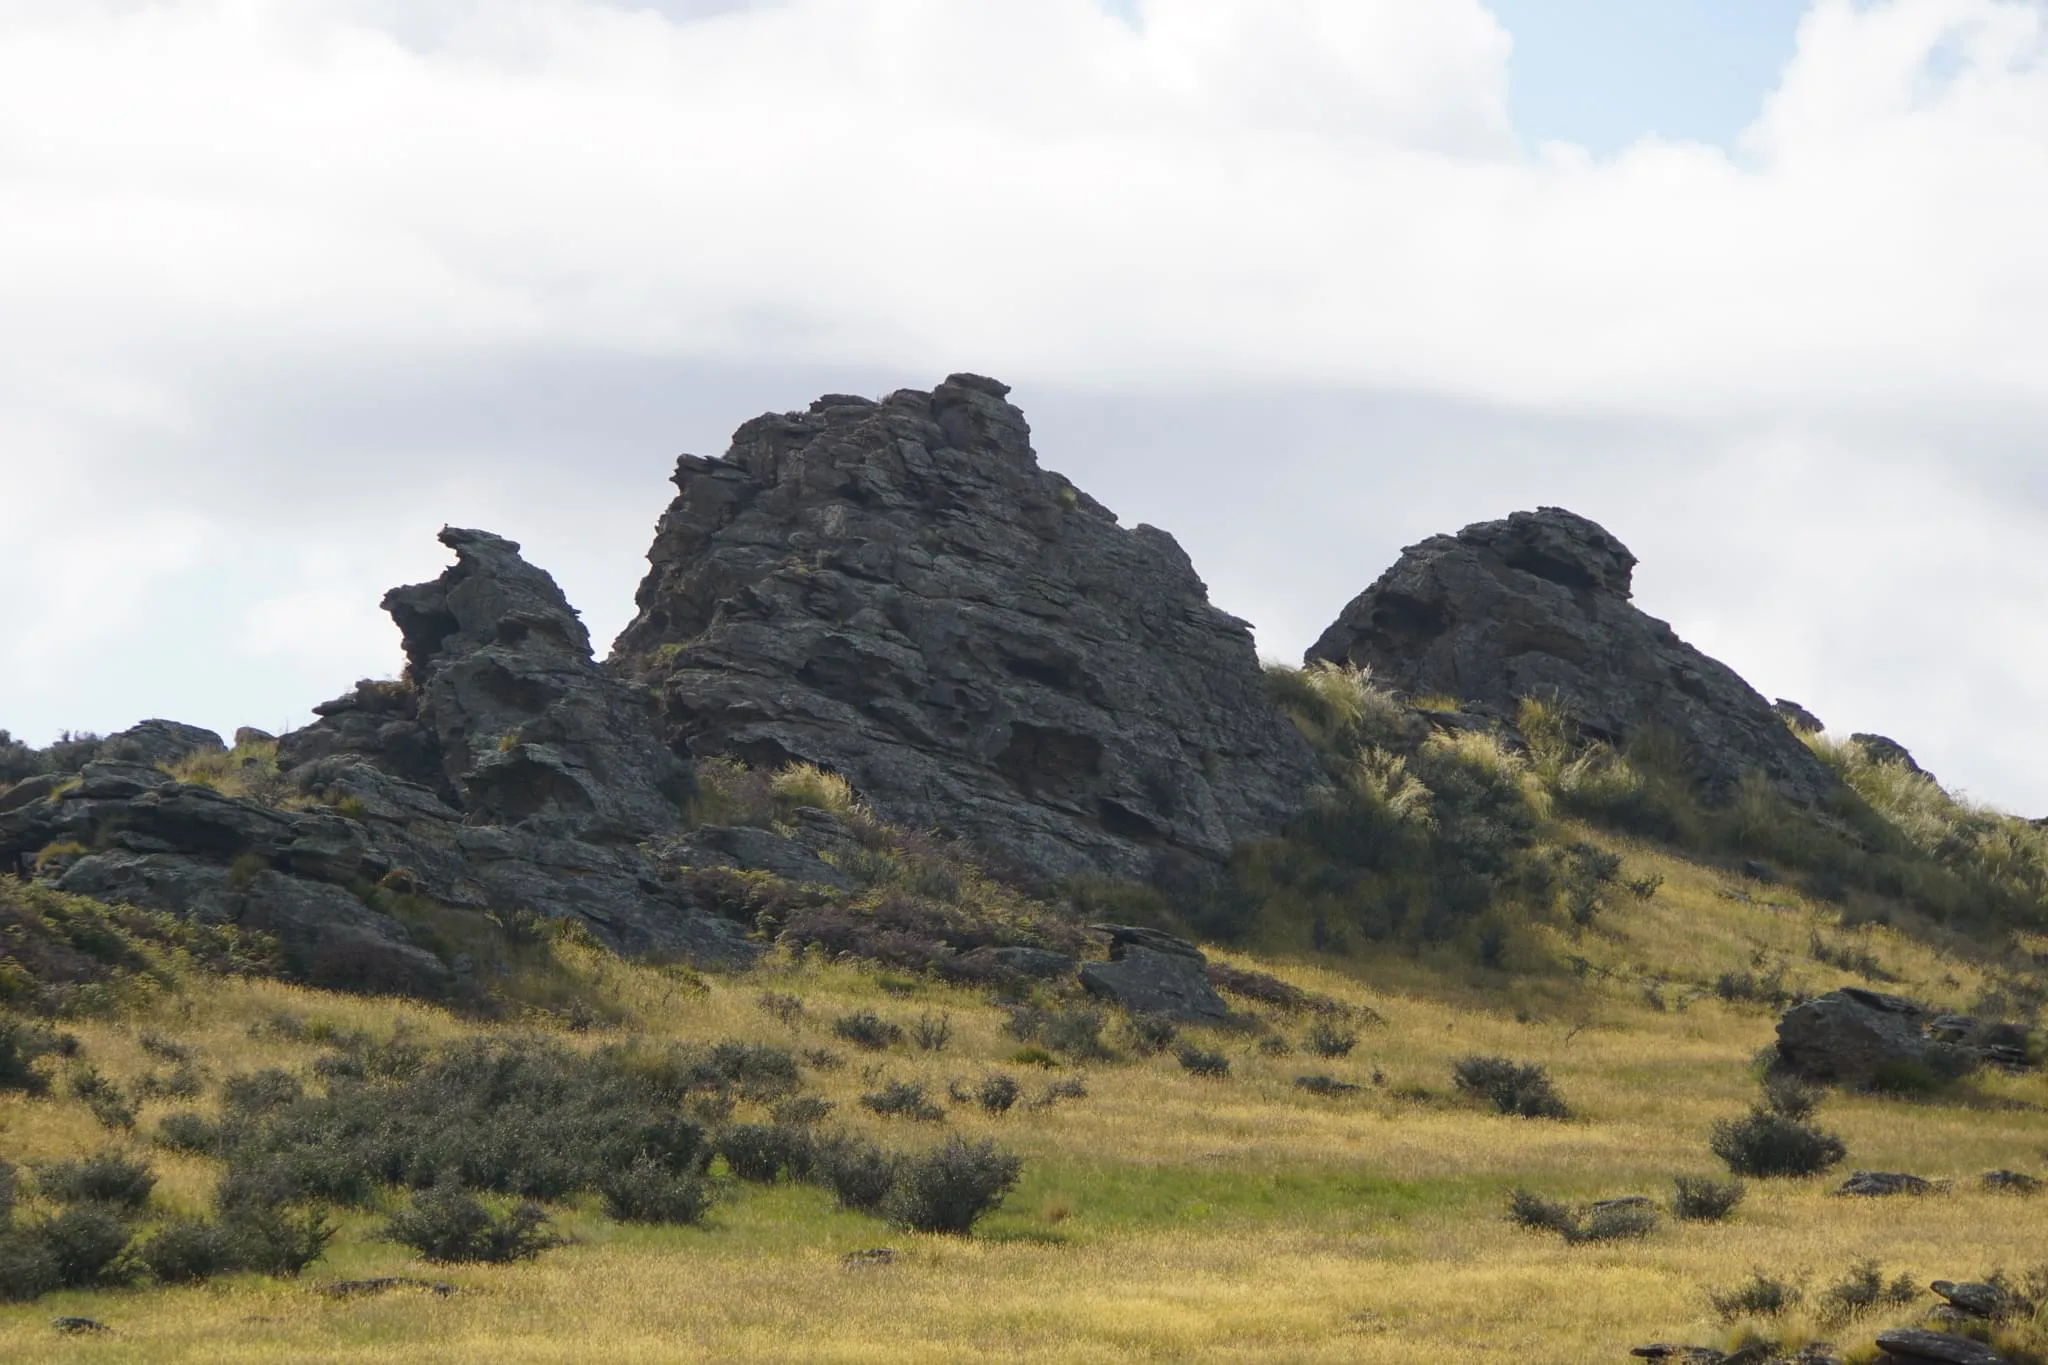 193 photos of Dry Field Rocks